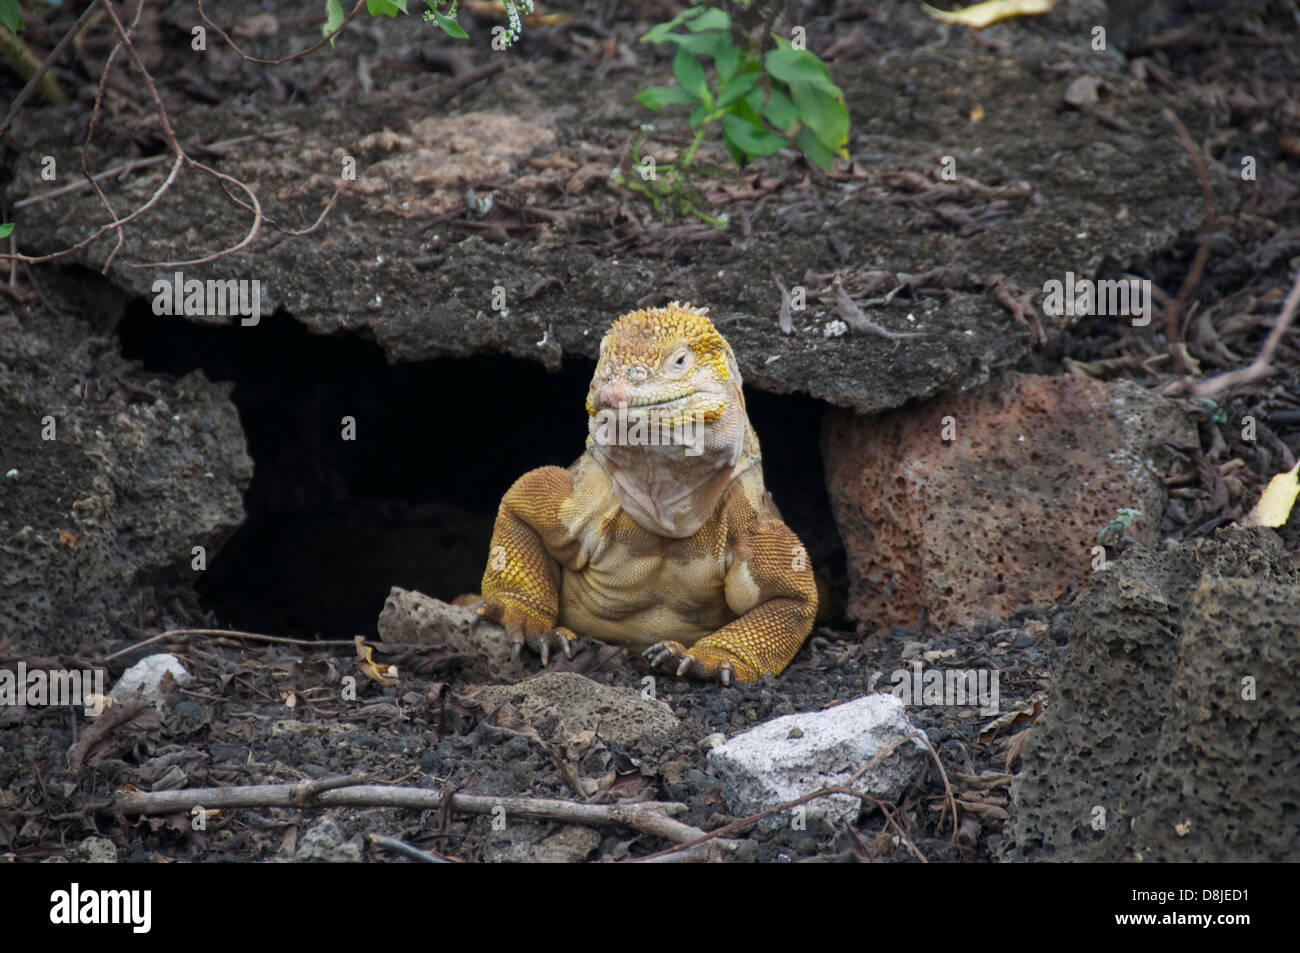 yellow iguana in rock Stock Photo